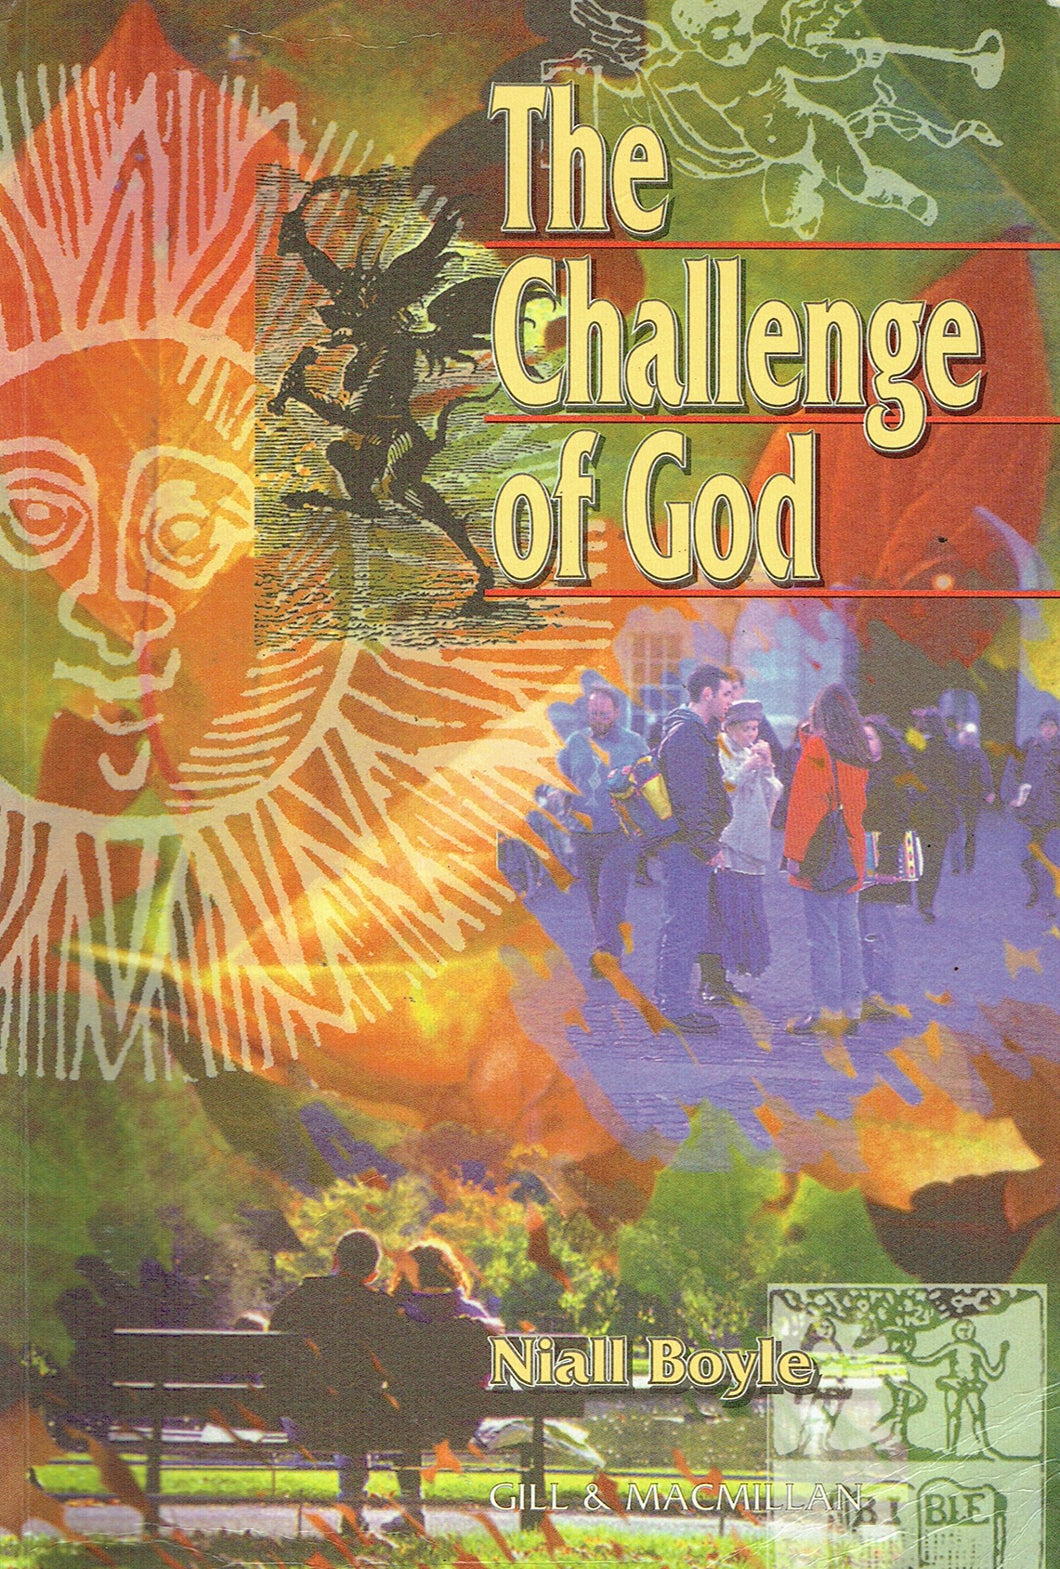 The Challenge of God